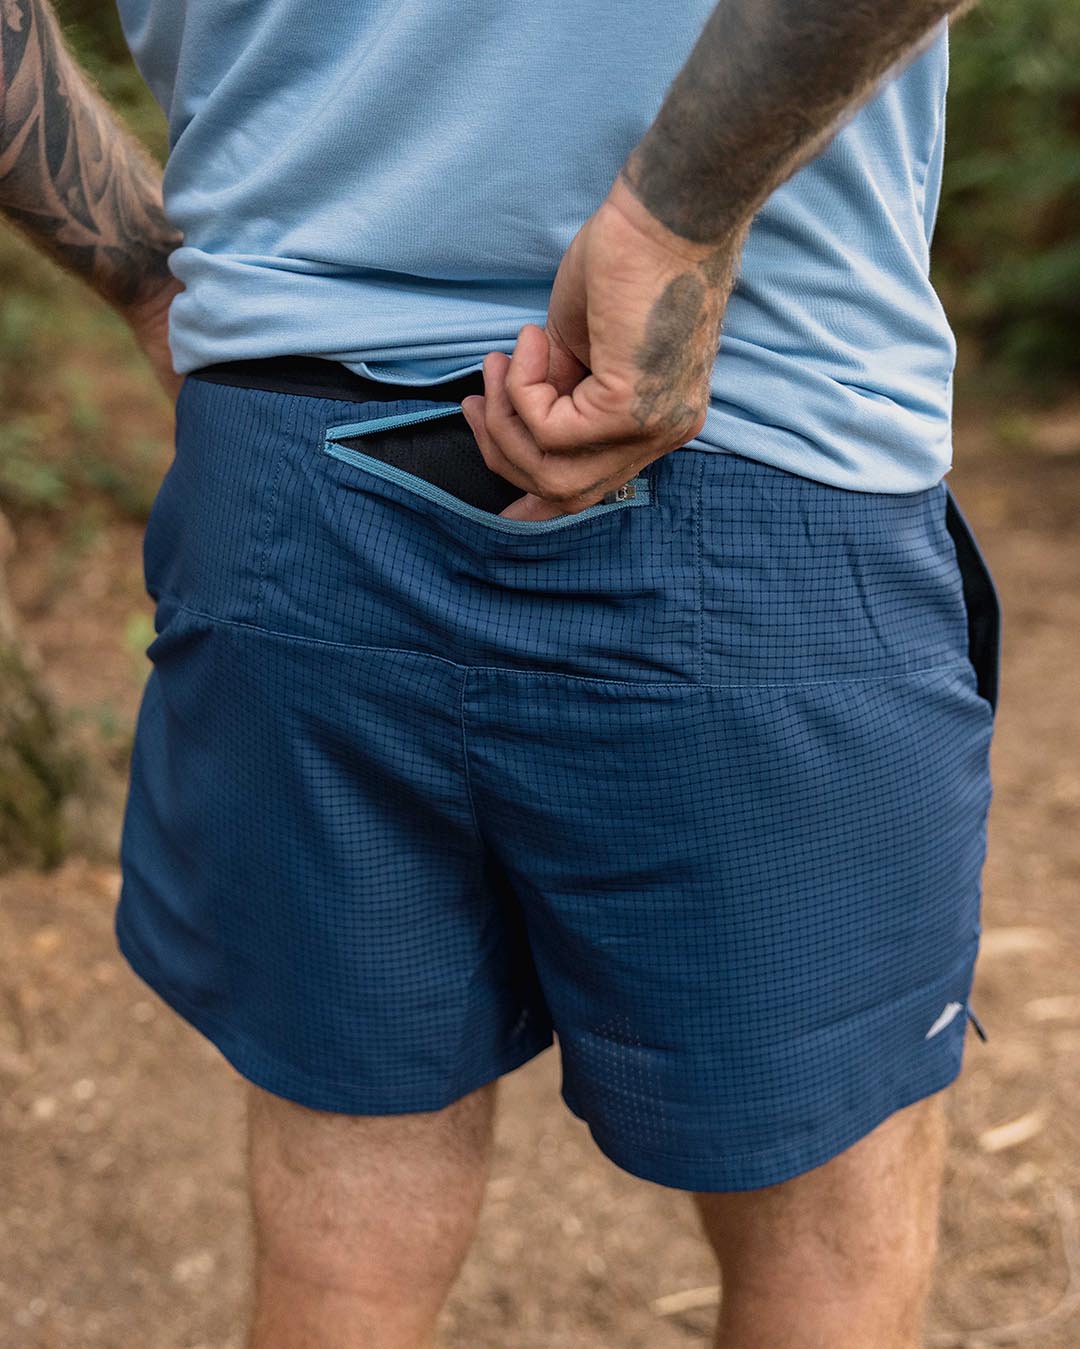 Descent Trail Recycled Shorts - Dark Denim